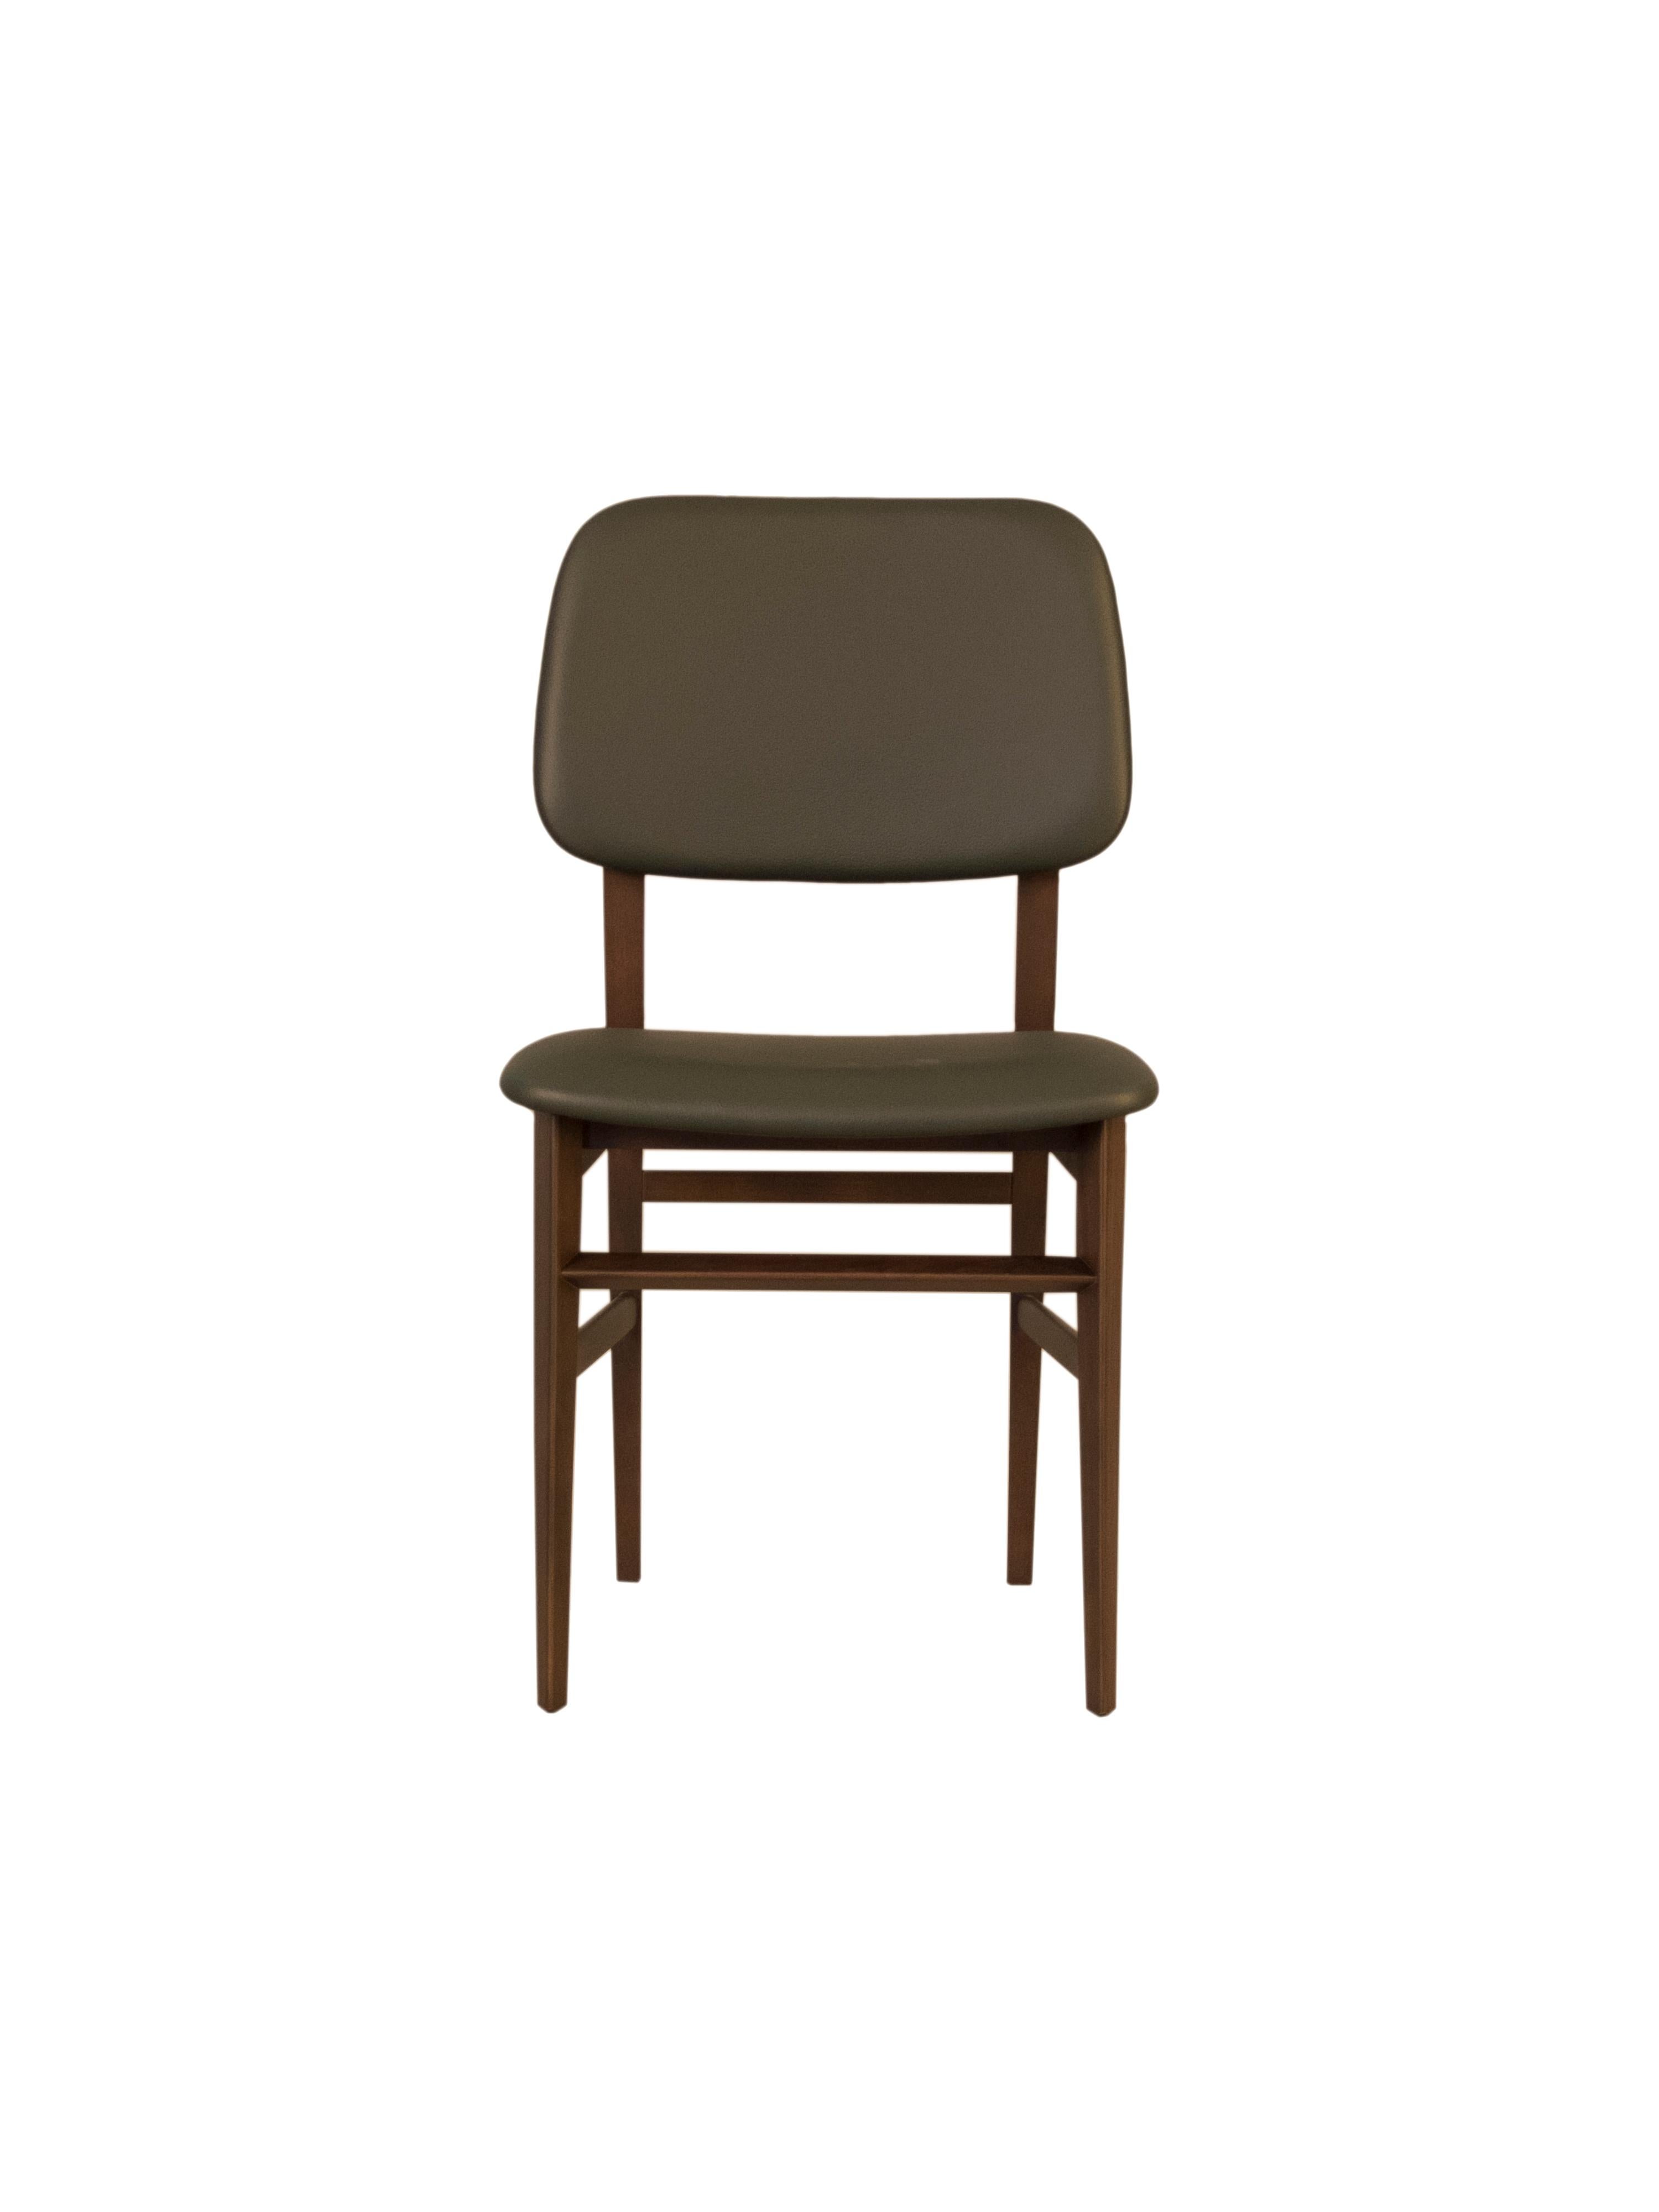 Morelato, Savina Chair in Ash Wood 4